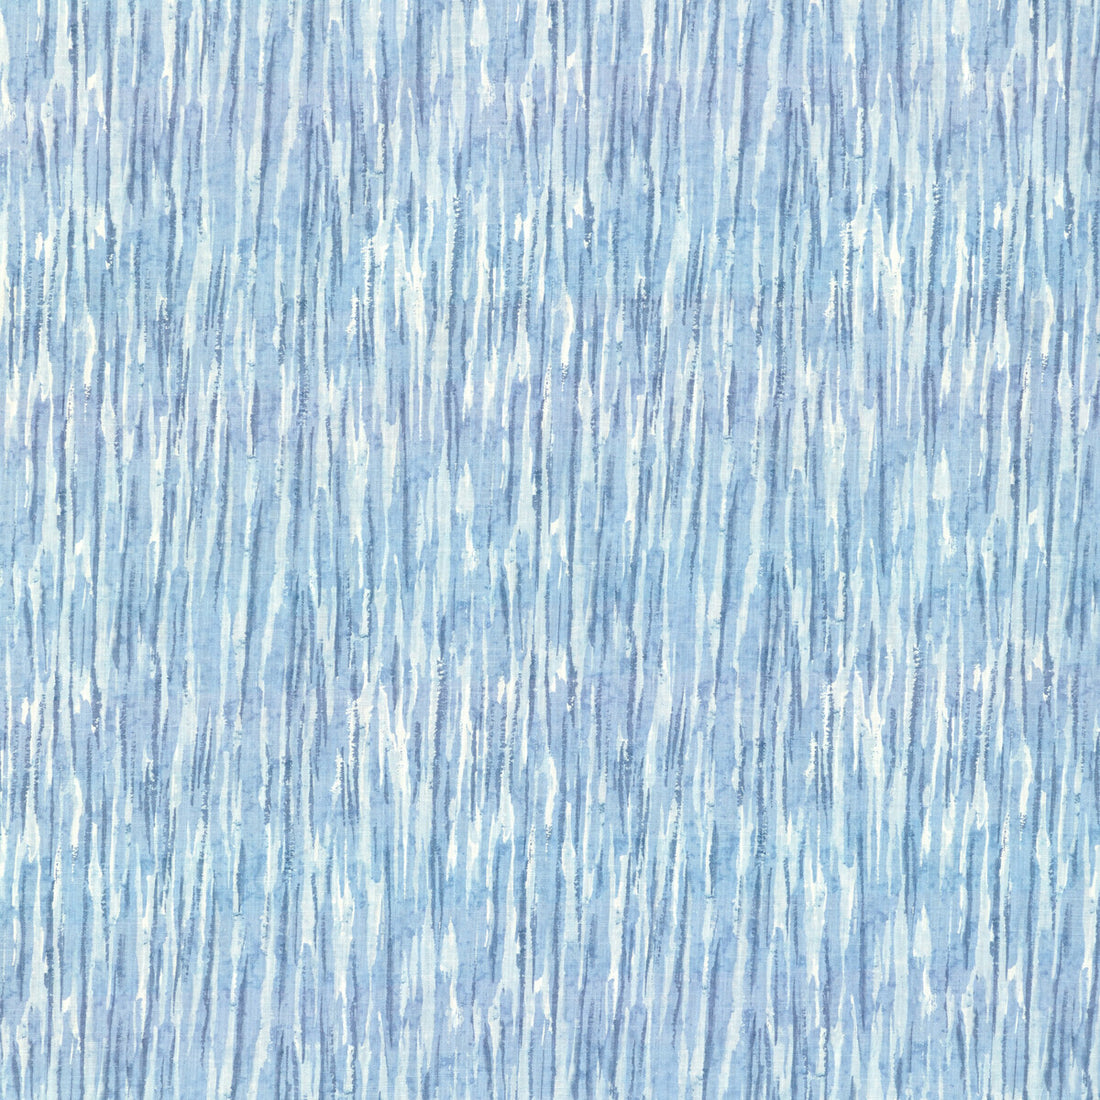 Senko fabric in sky color - pattern SENKO.15.0 - by Kravet Basics in the Monterey collection